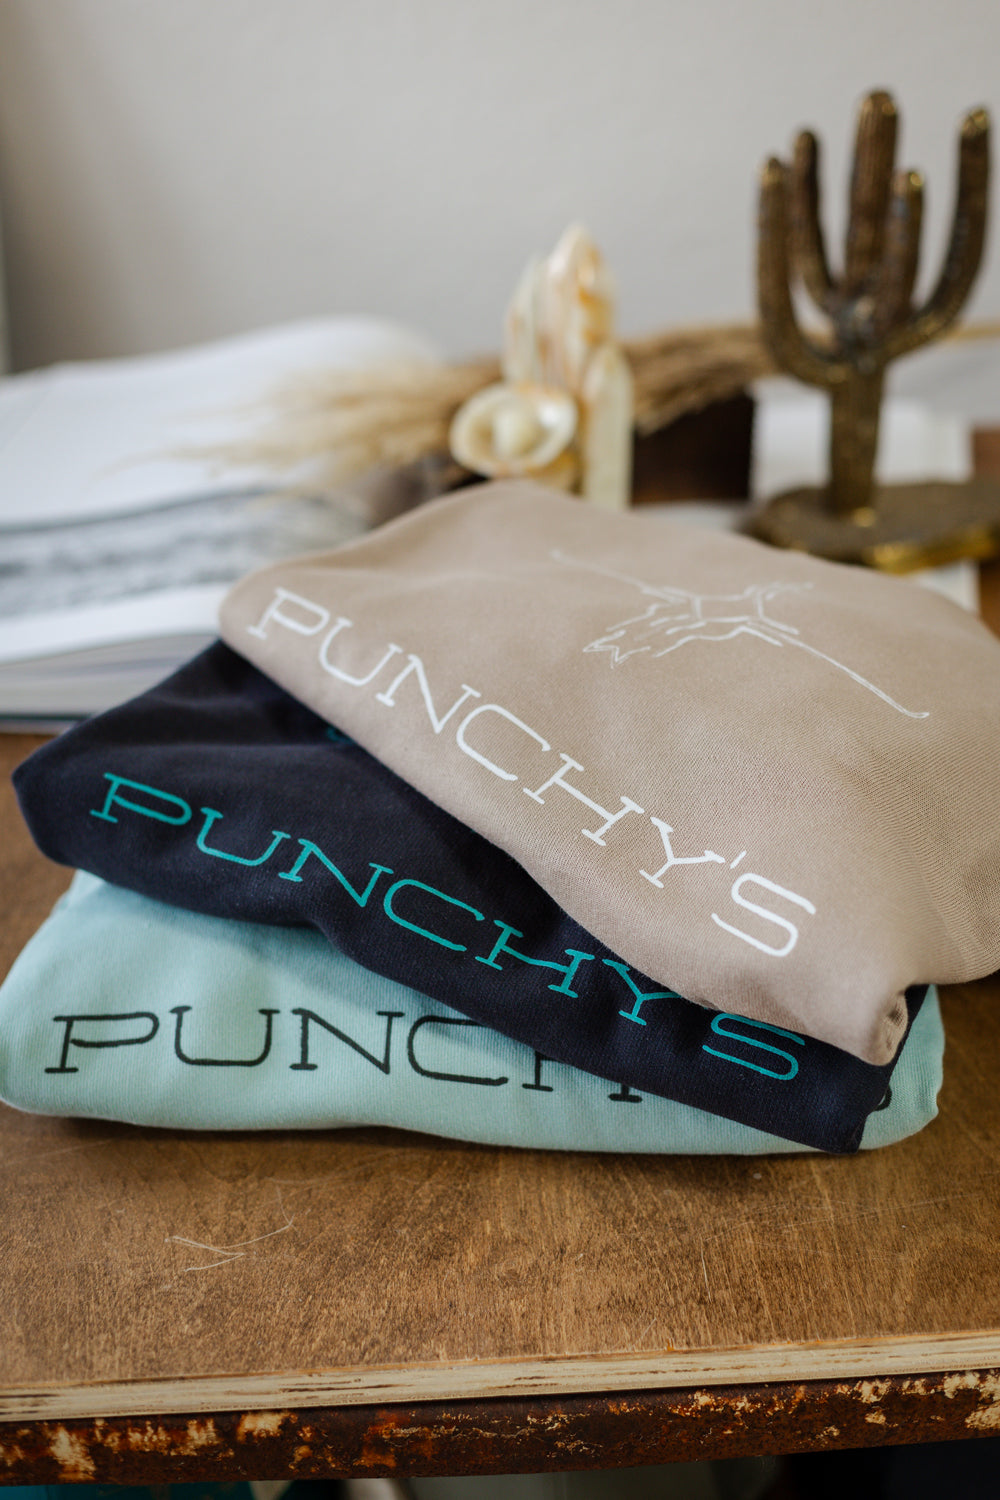 Tan Punchy's Sweatshirt